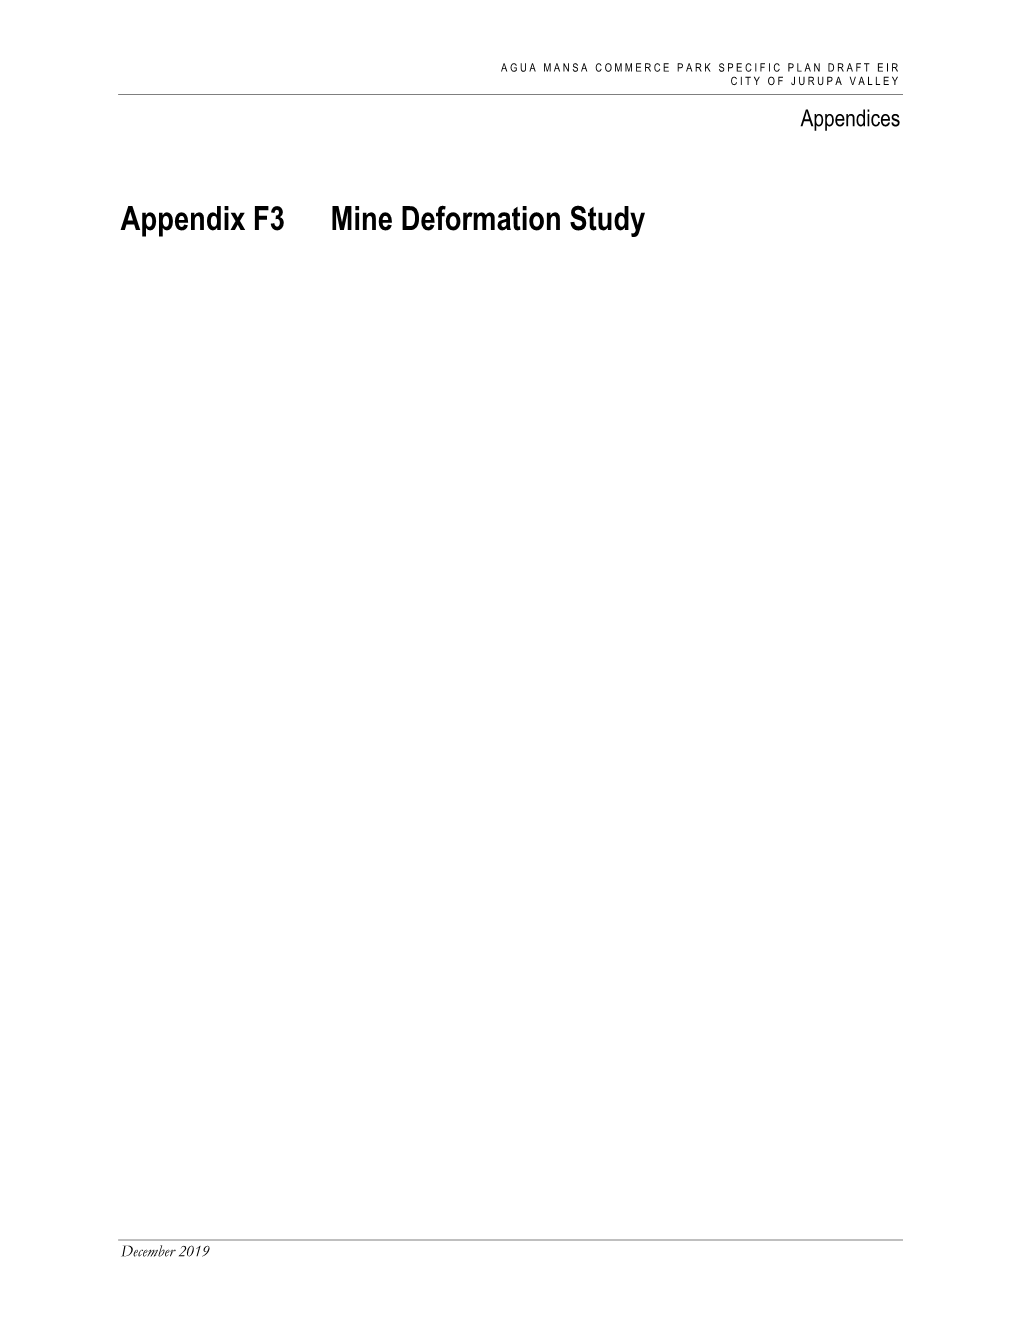 Appendix F3 Mine Deformation Study